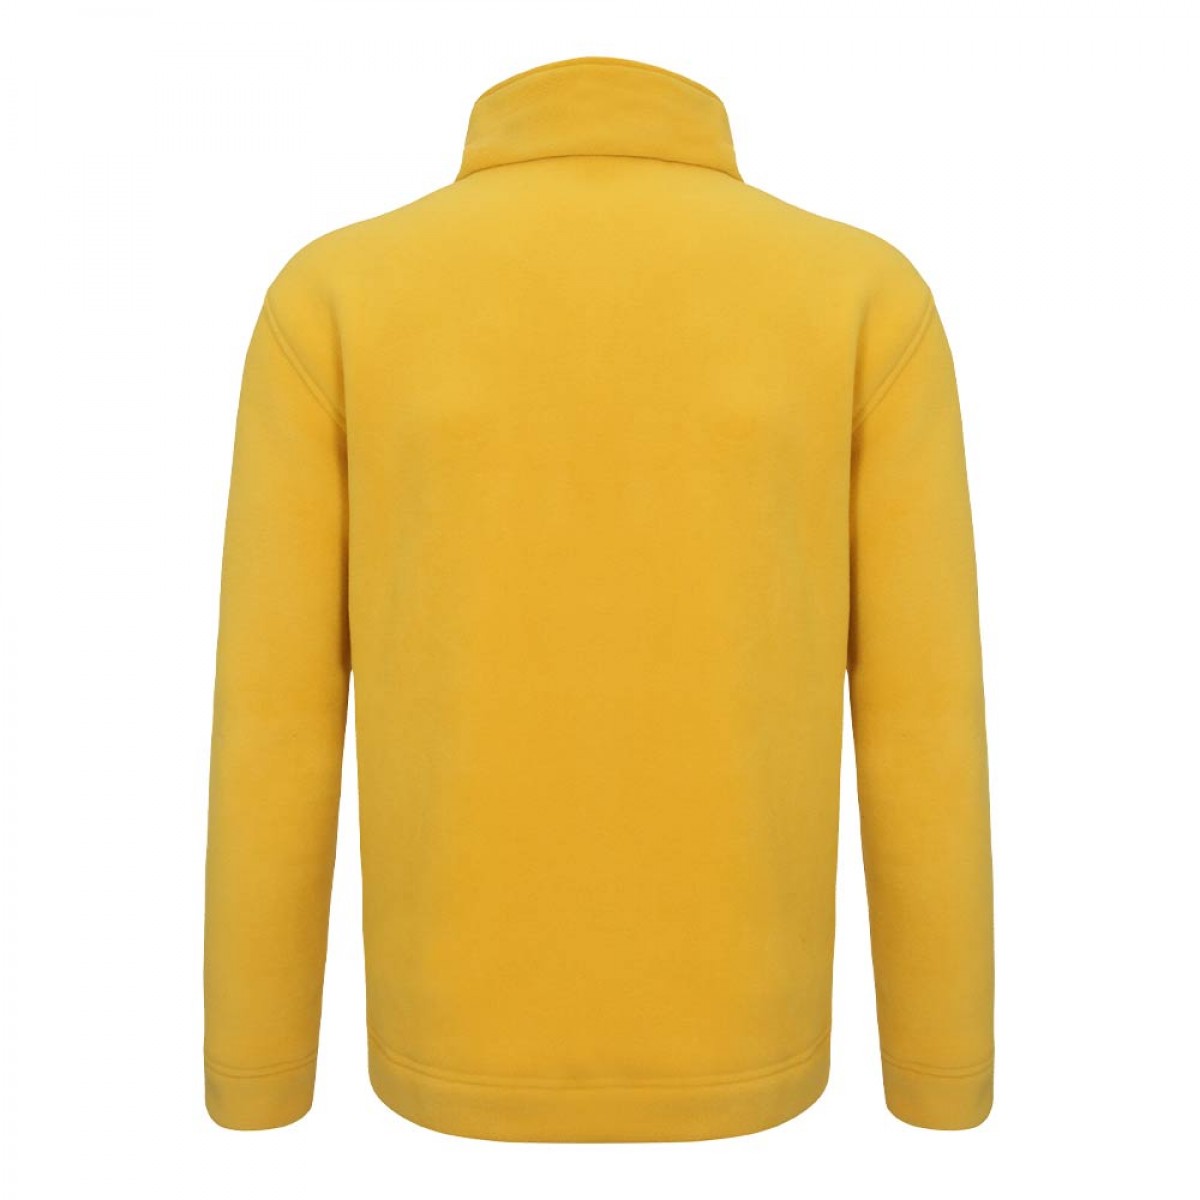 fleece-half-zipper-jacket-kfhz15159-1b